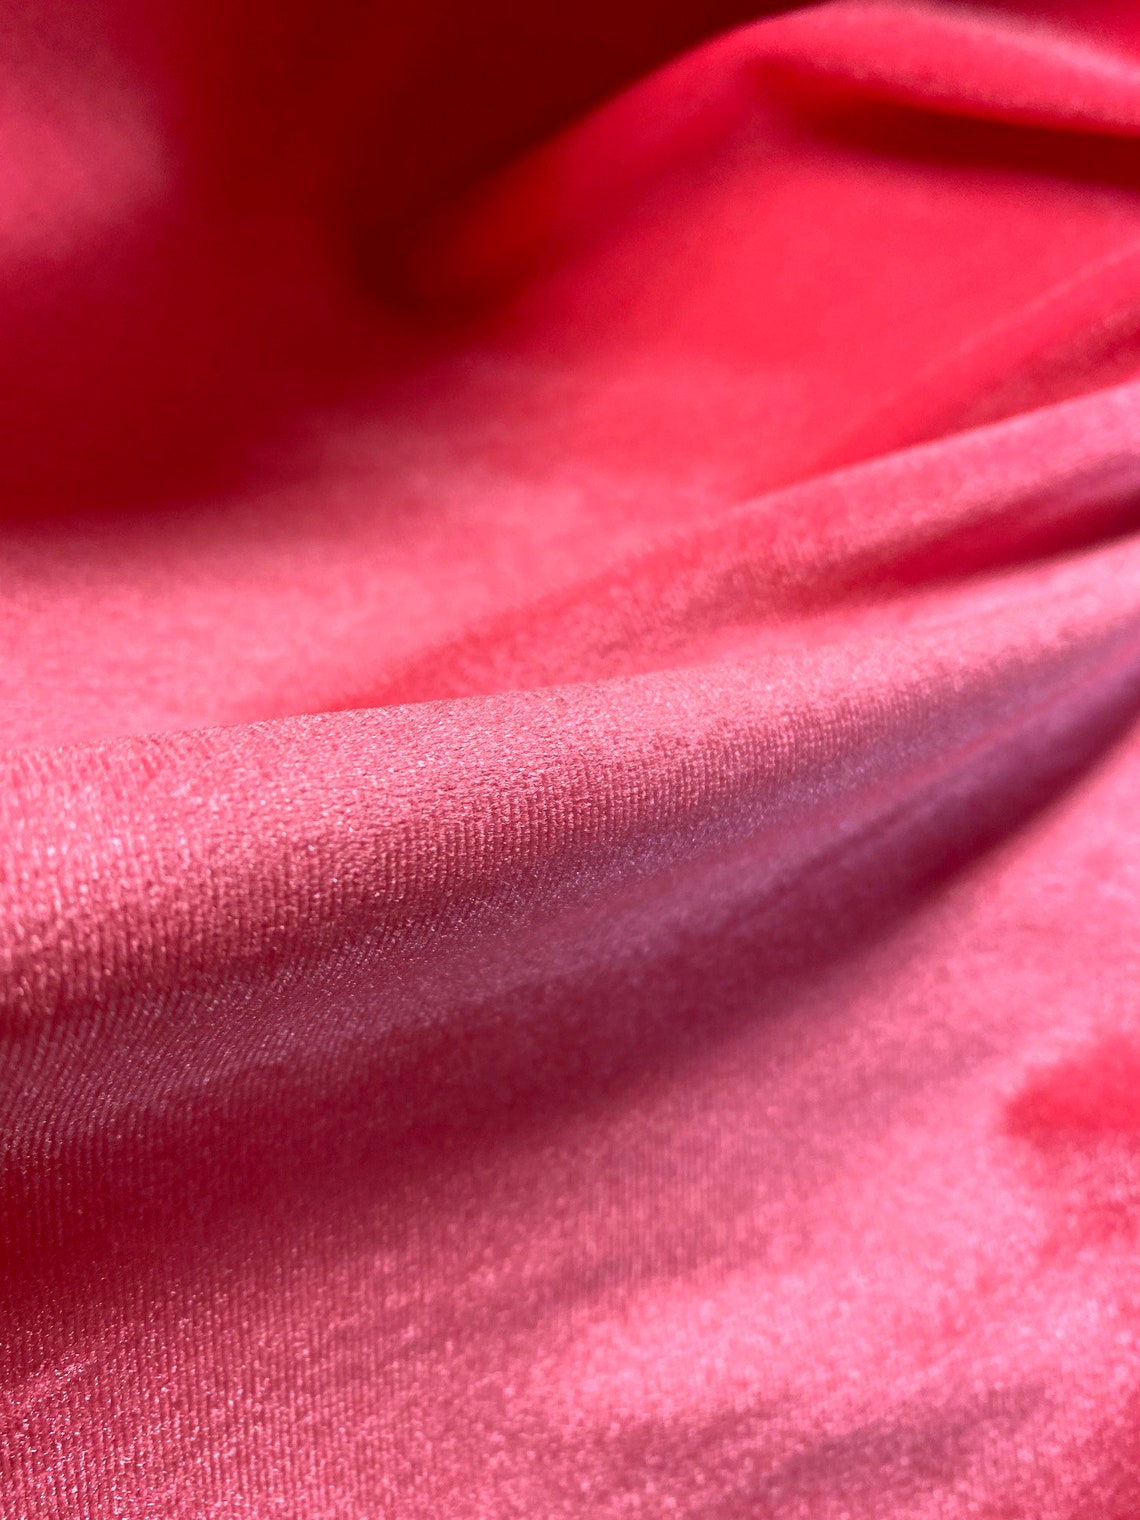 Stretch Velvet Neon Hot Pink Polyester Spandex Lycra Fabric | Etsy